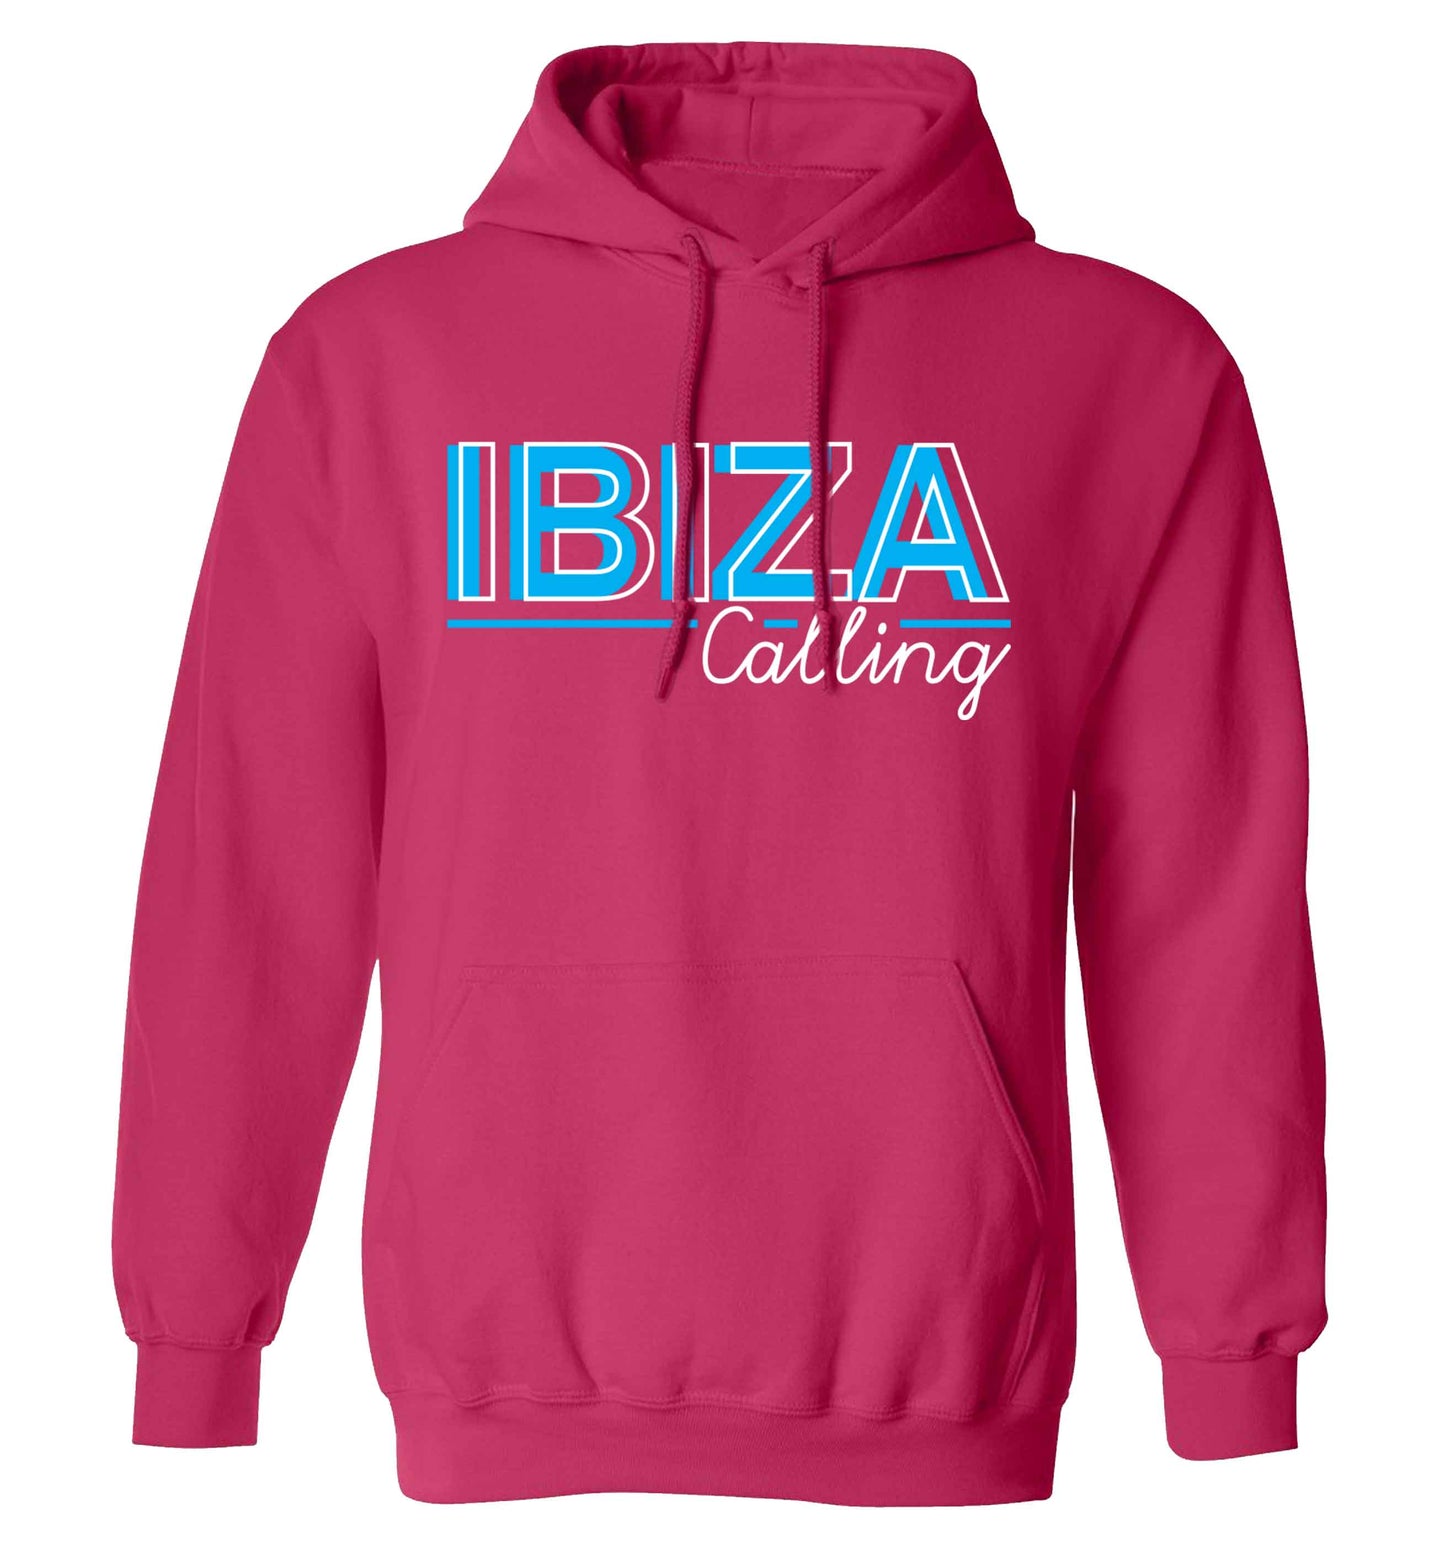 Ibiza calling adults unisex pink hoodie 2XL